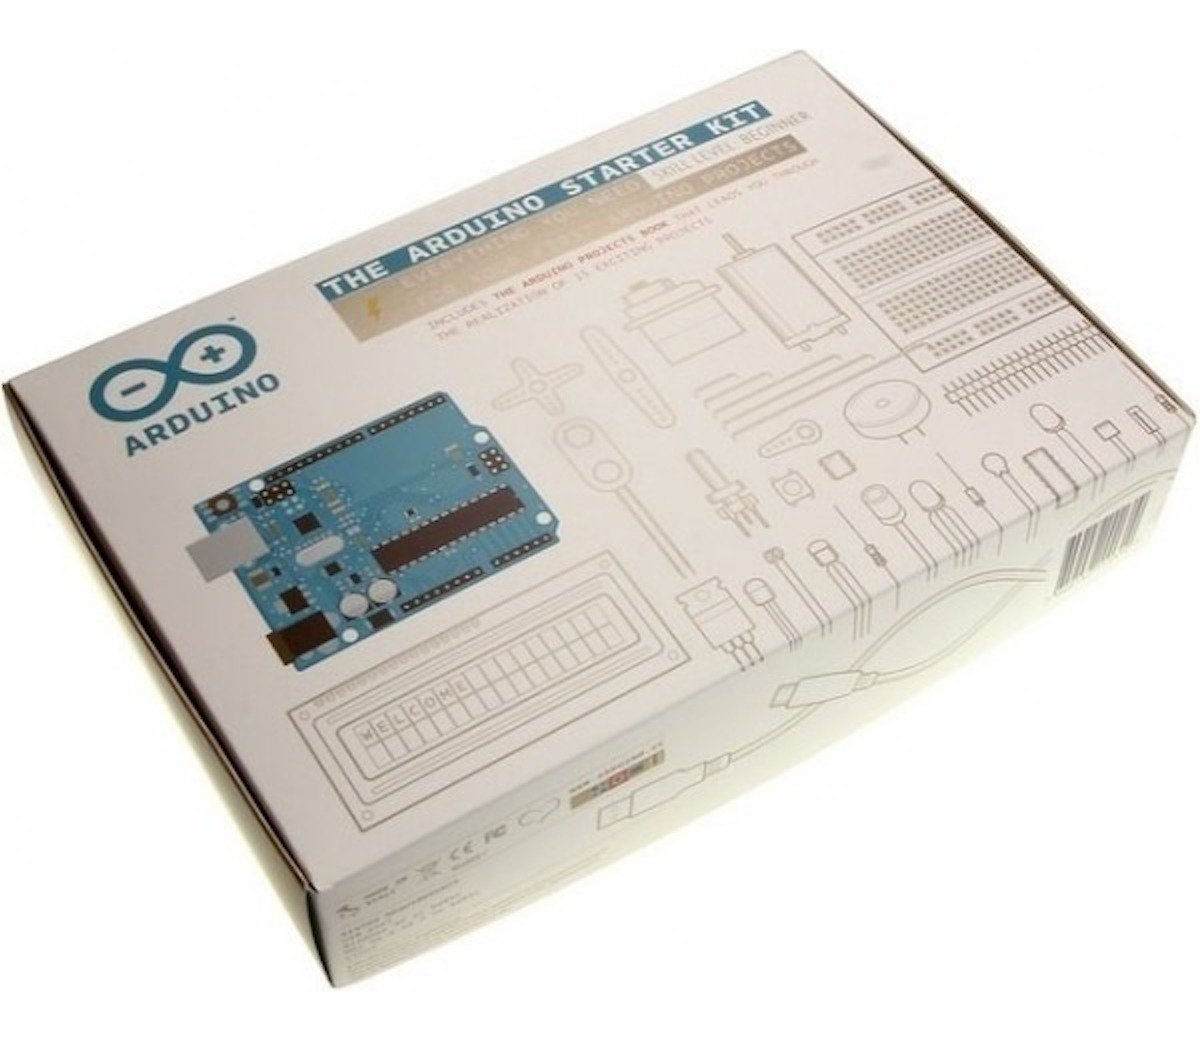 Kit de Inicio Arduino Oficial Español